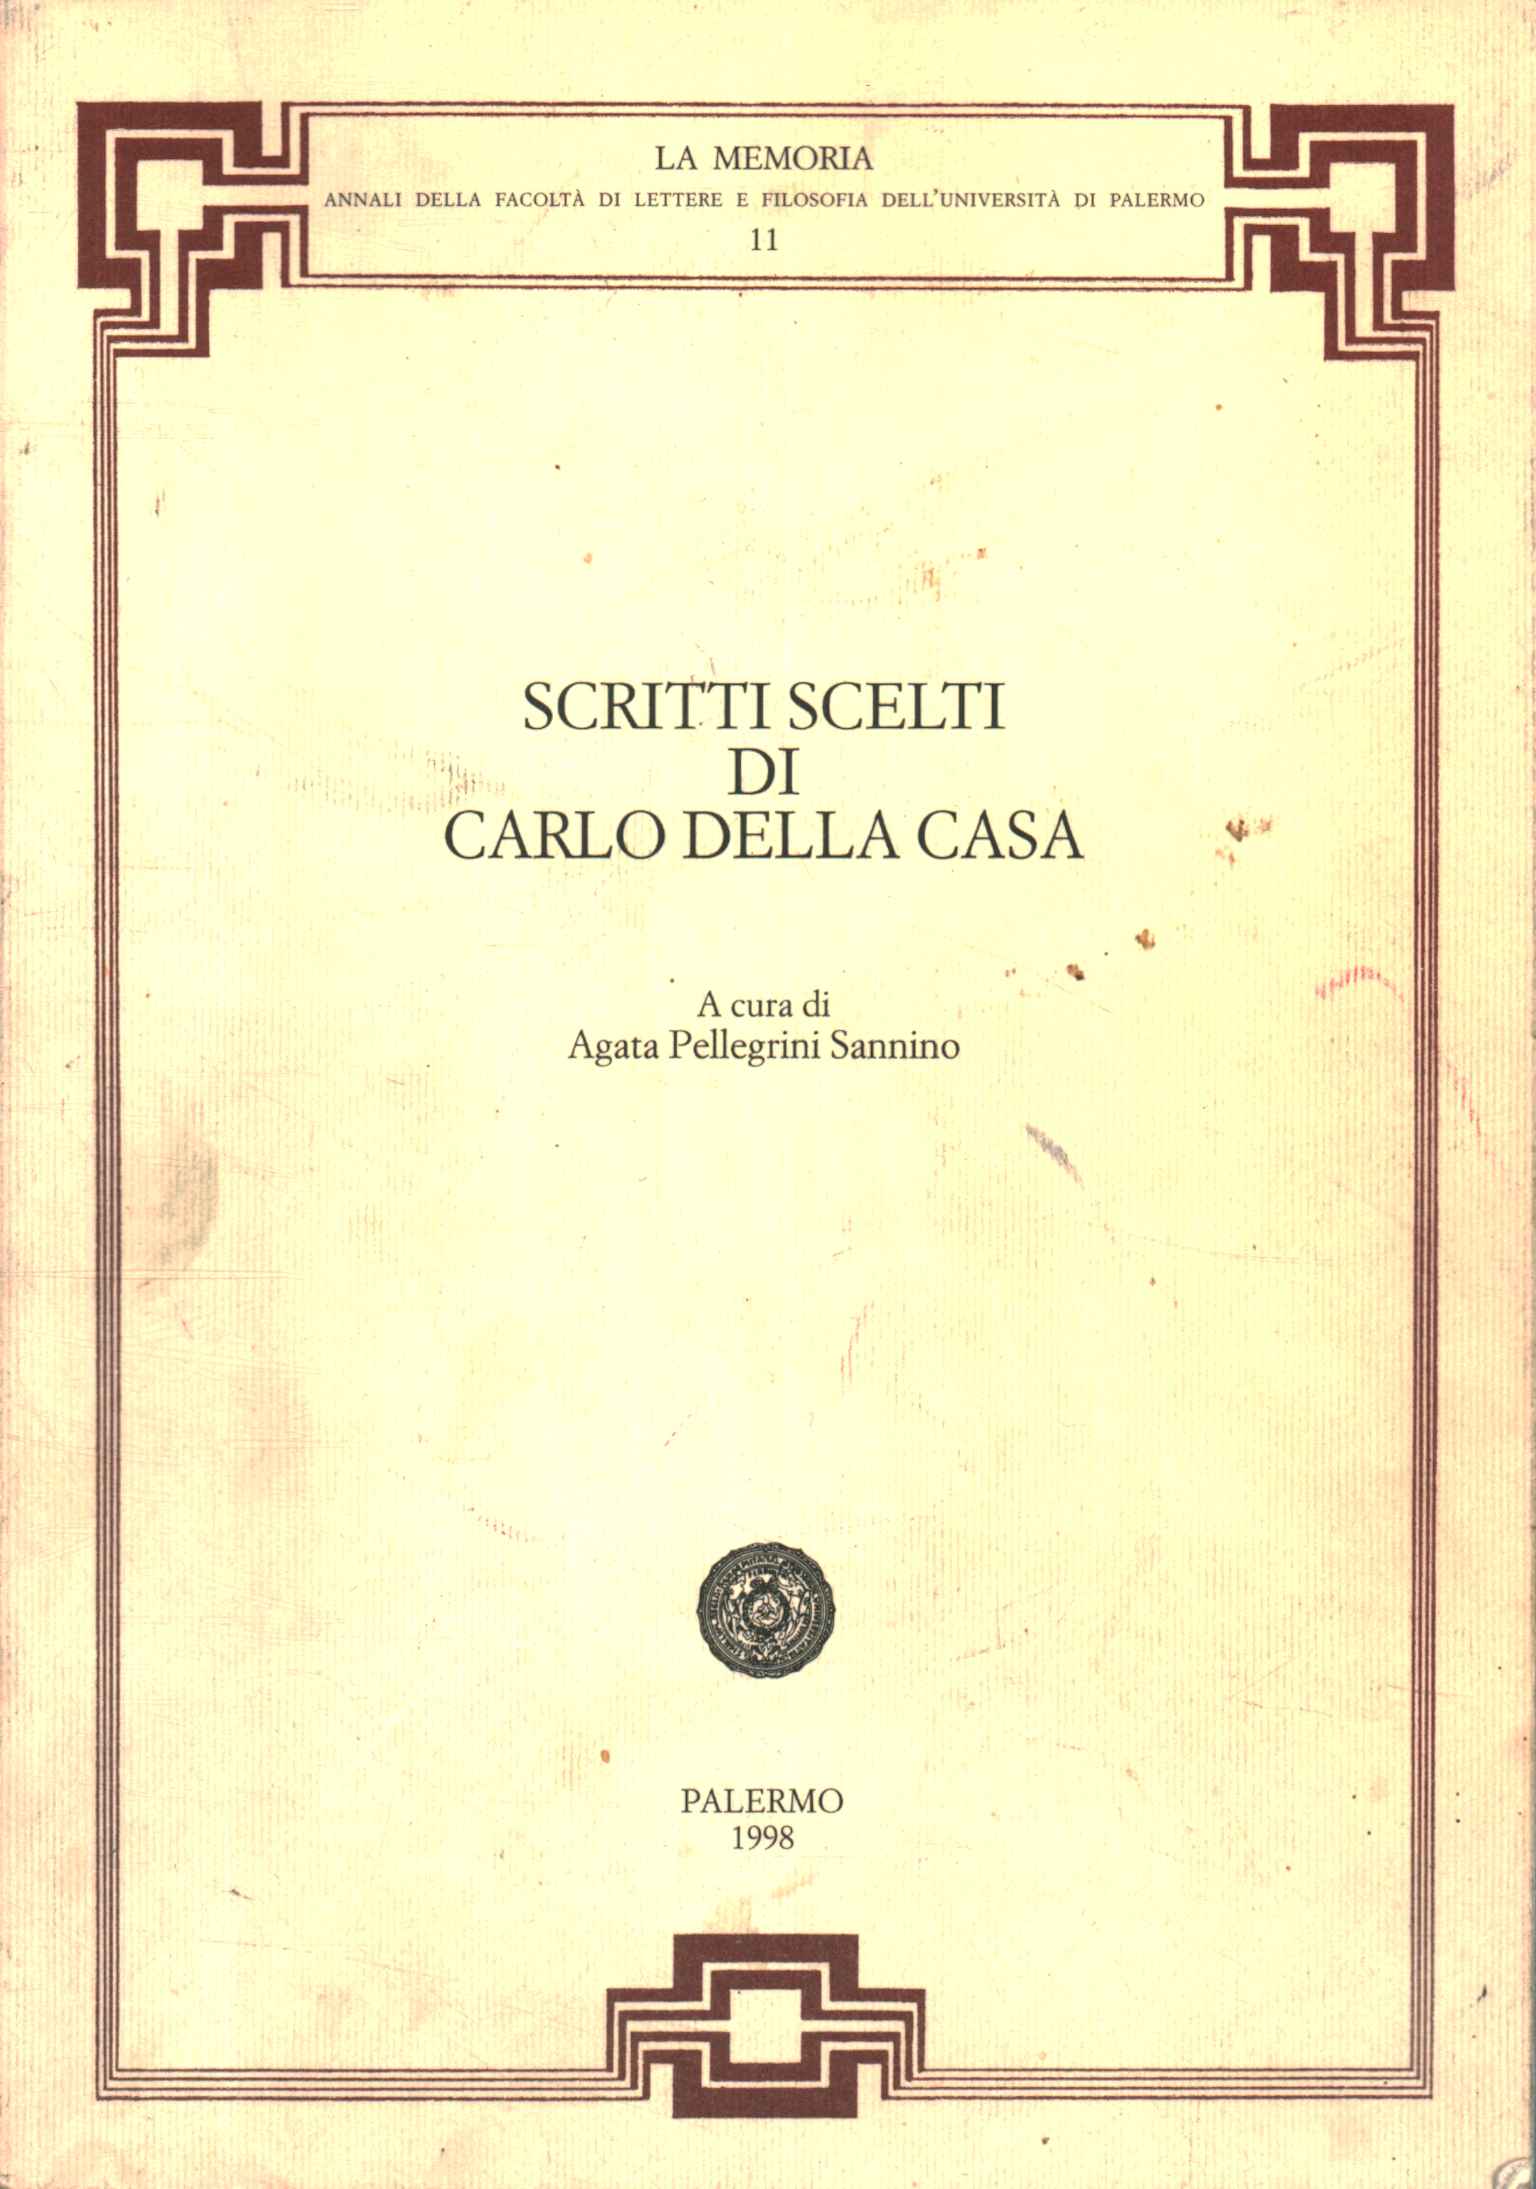 Selected writings by Carlo Della Casa